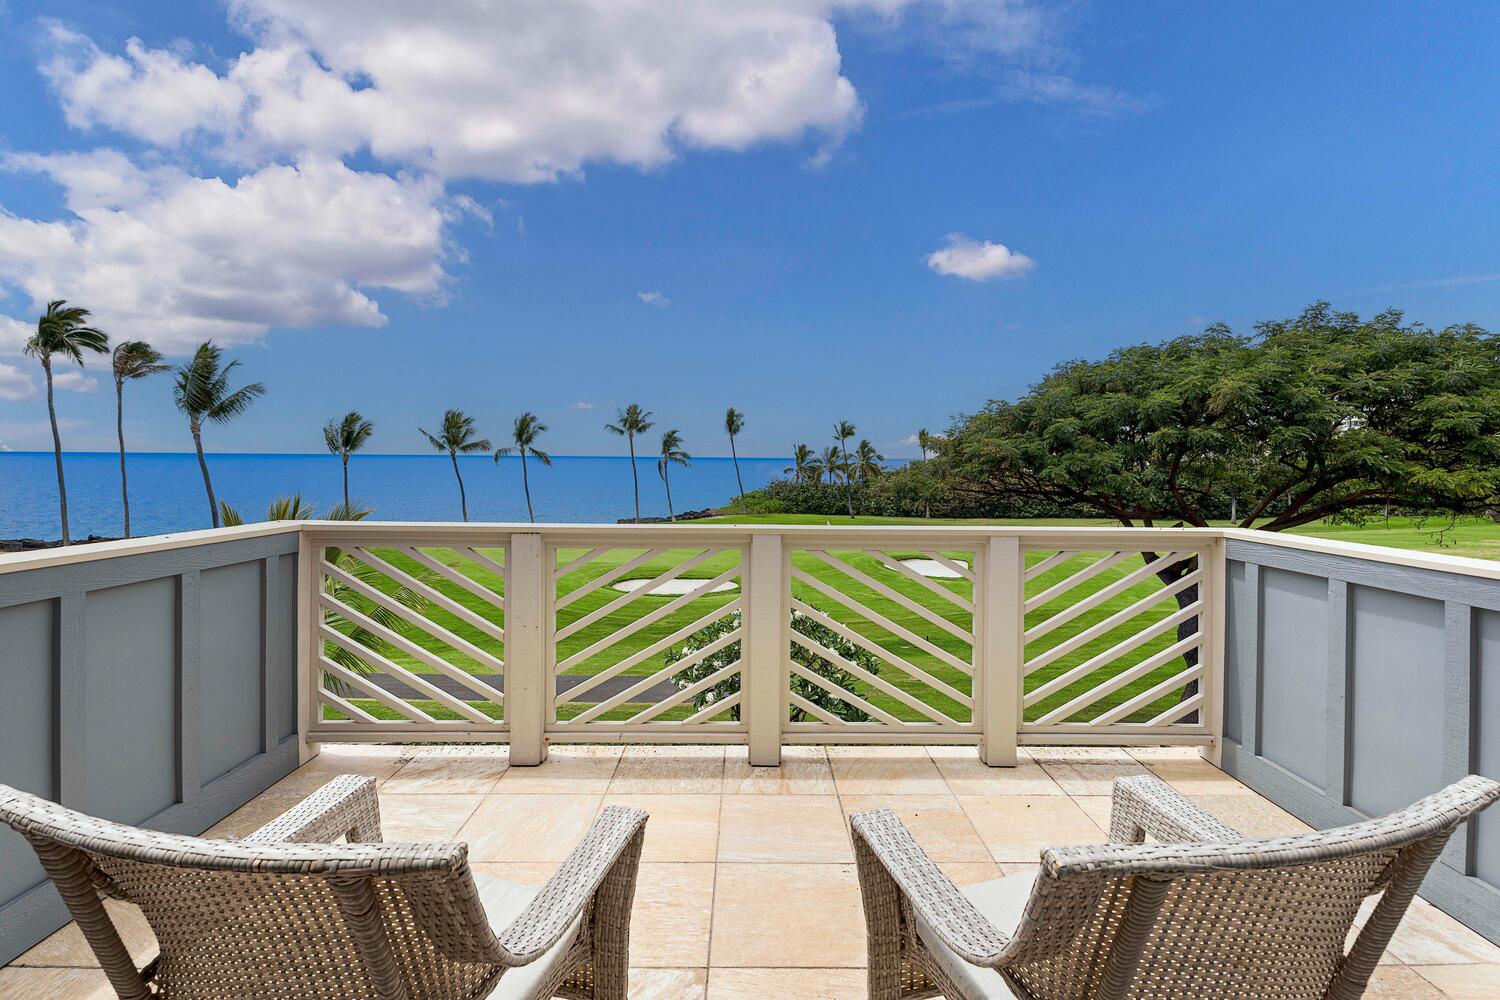 Kailua-Kona Vacation Rentals, Holua Kai #26 - Relaxing bedroom lanai with scenic ocean and palm tree views.